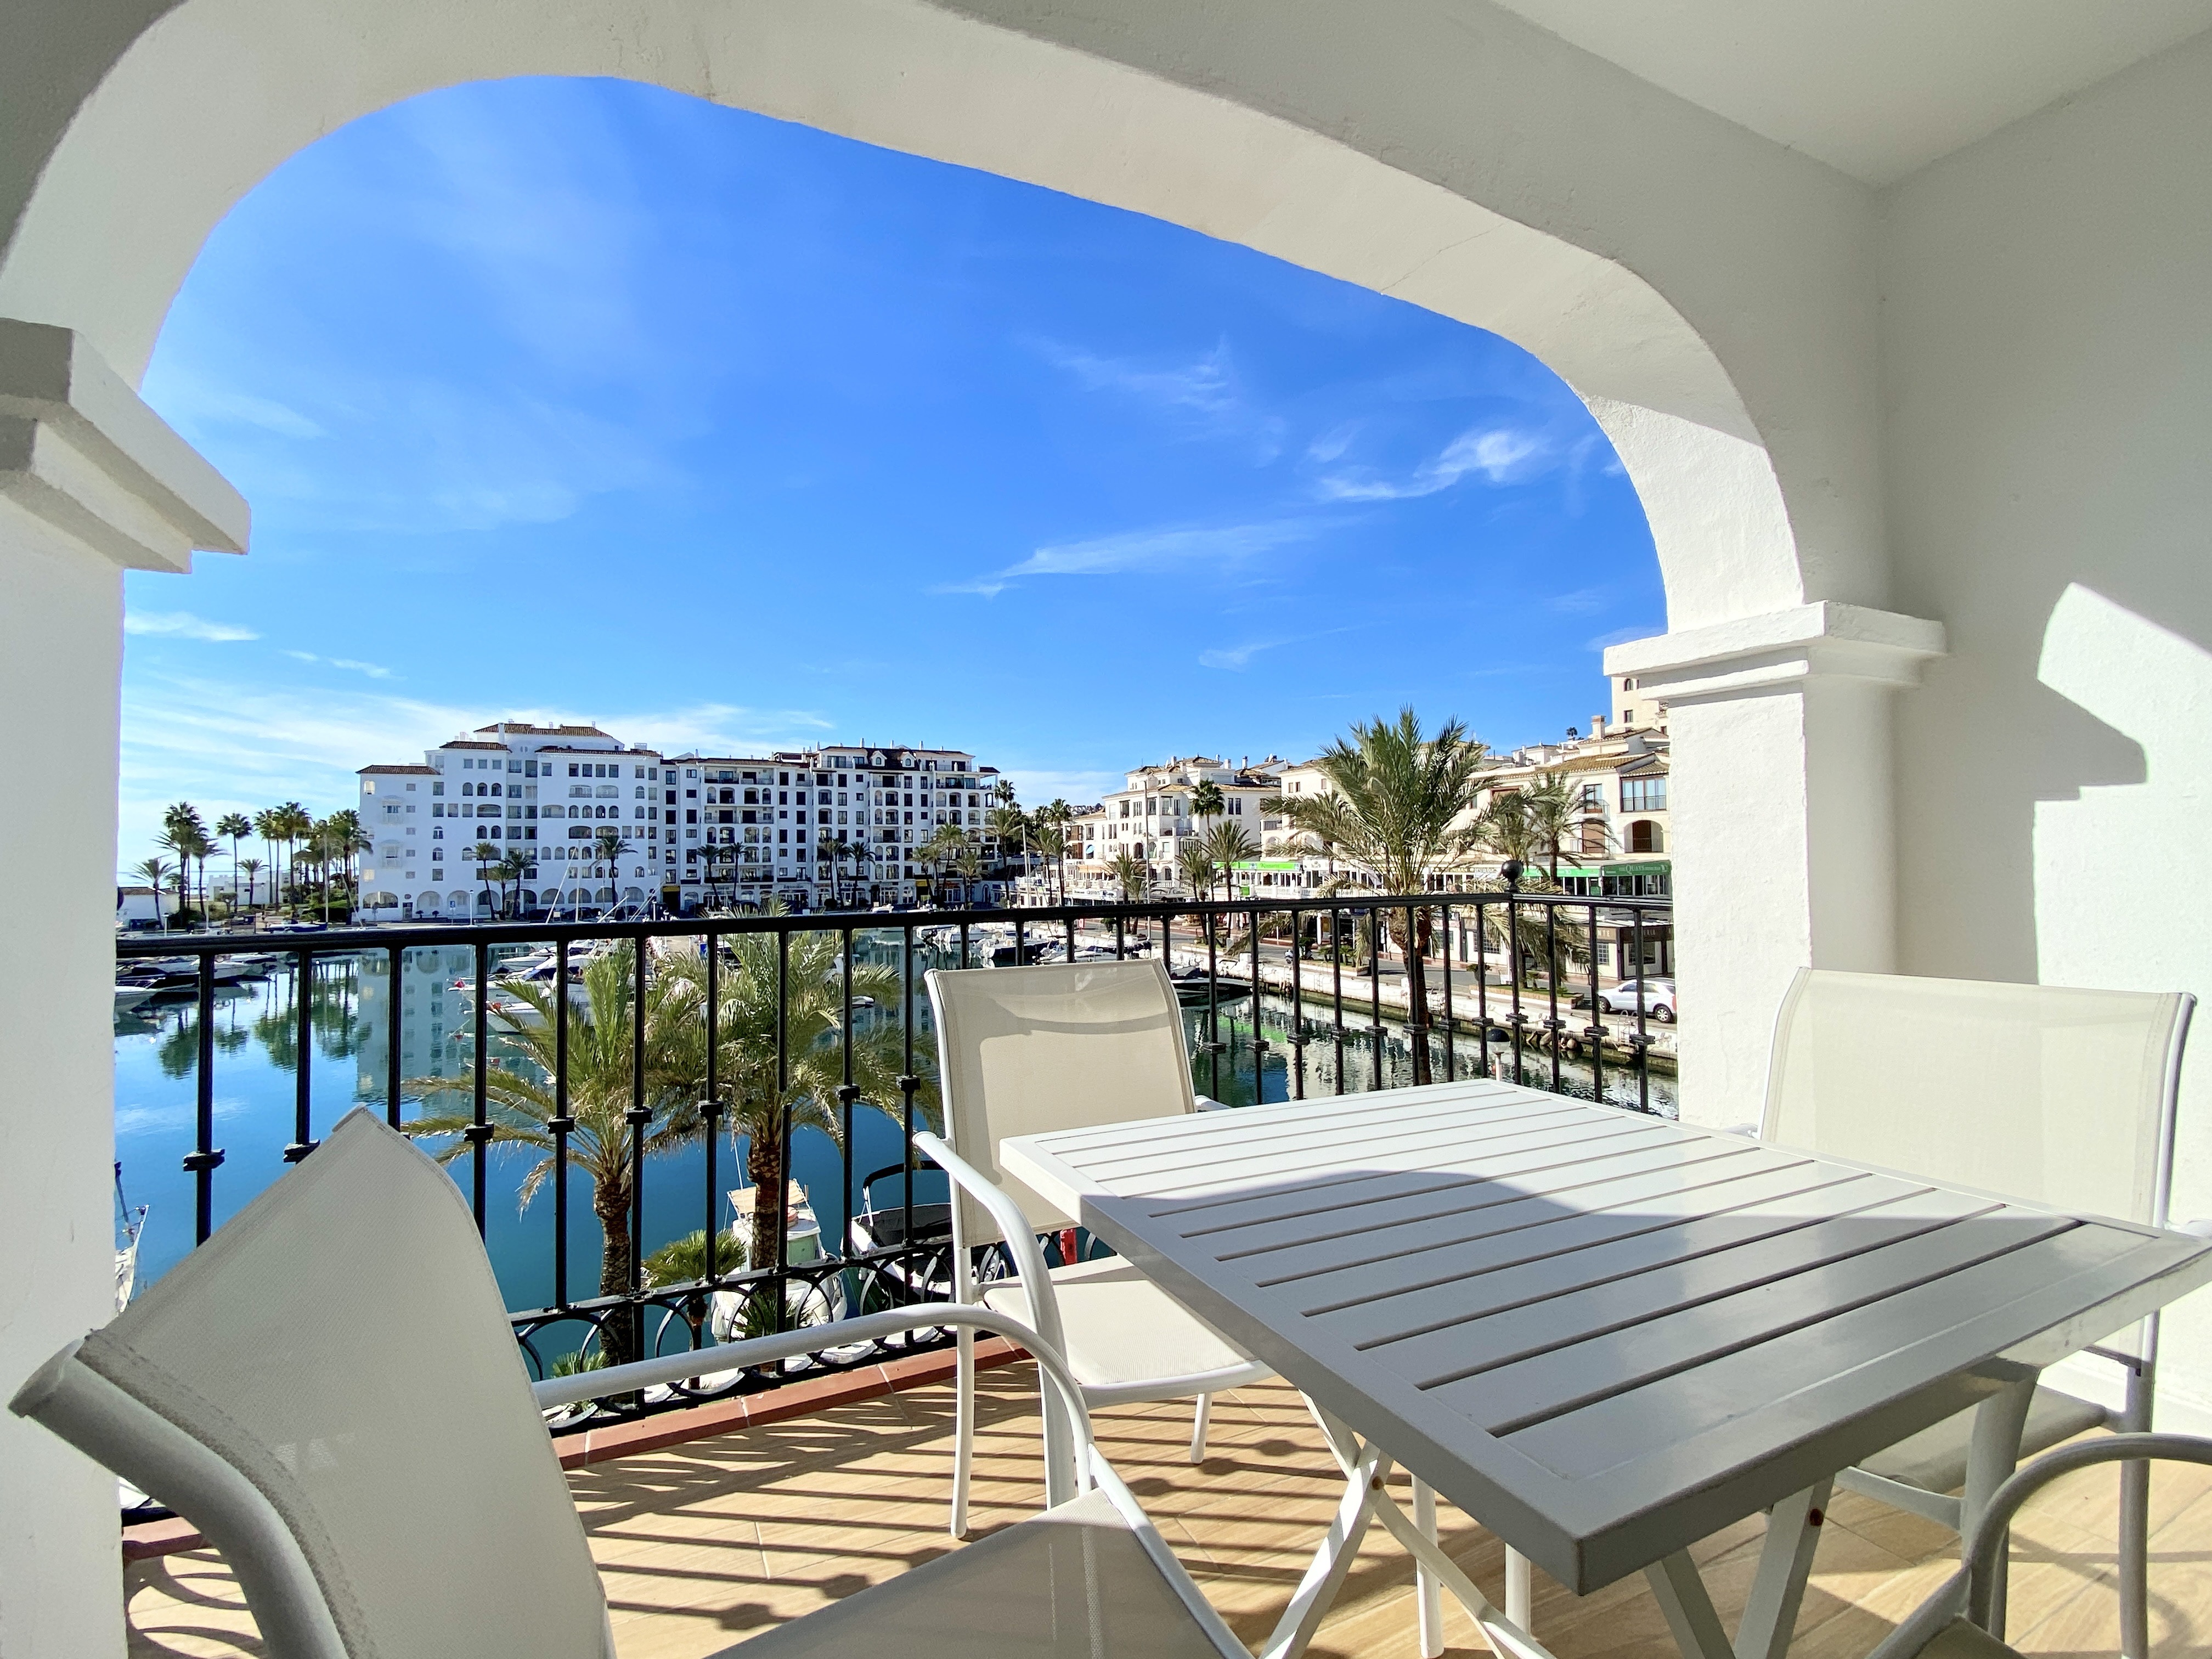 sunimmo spain for sale apartment à vendre appartement espagne marina port costa del sol la duquesa